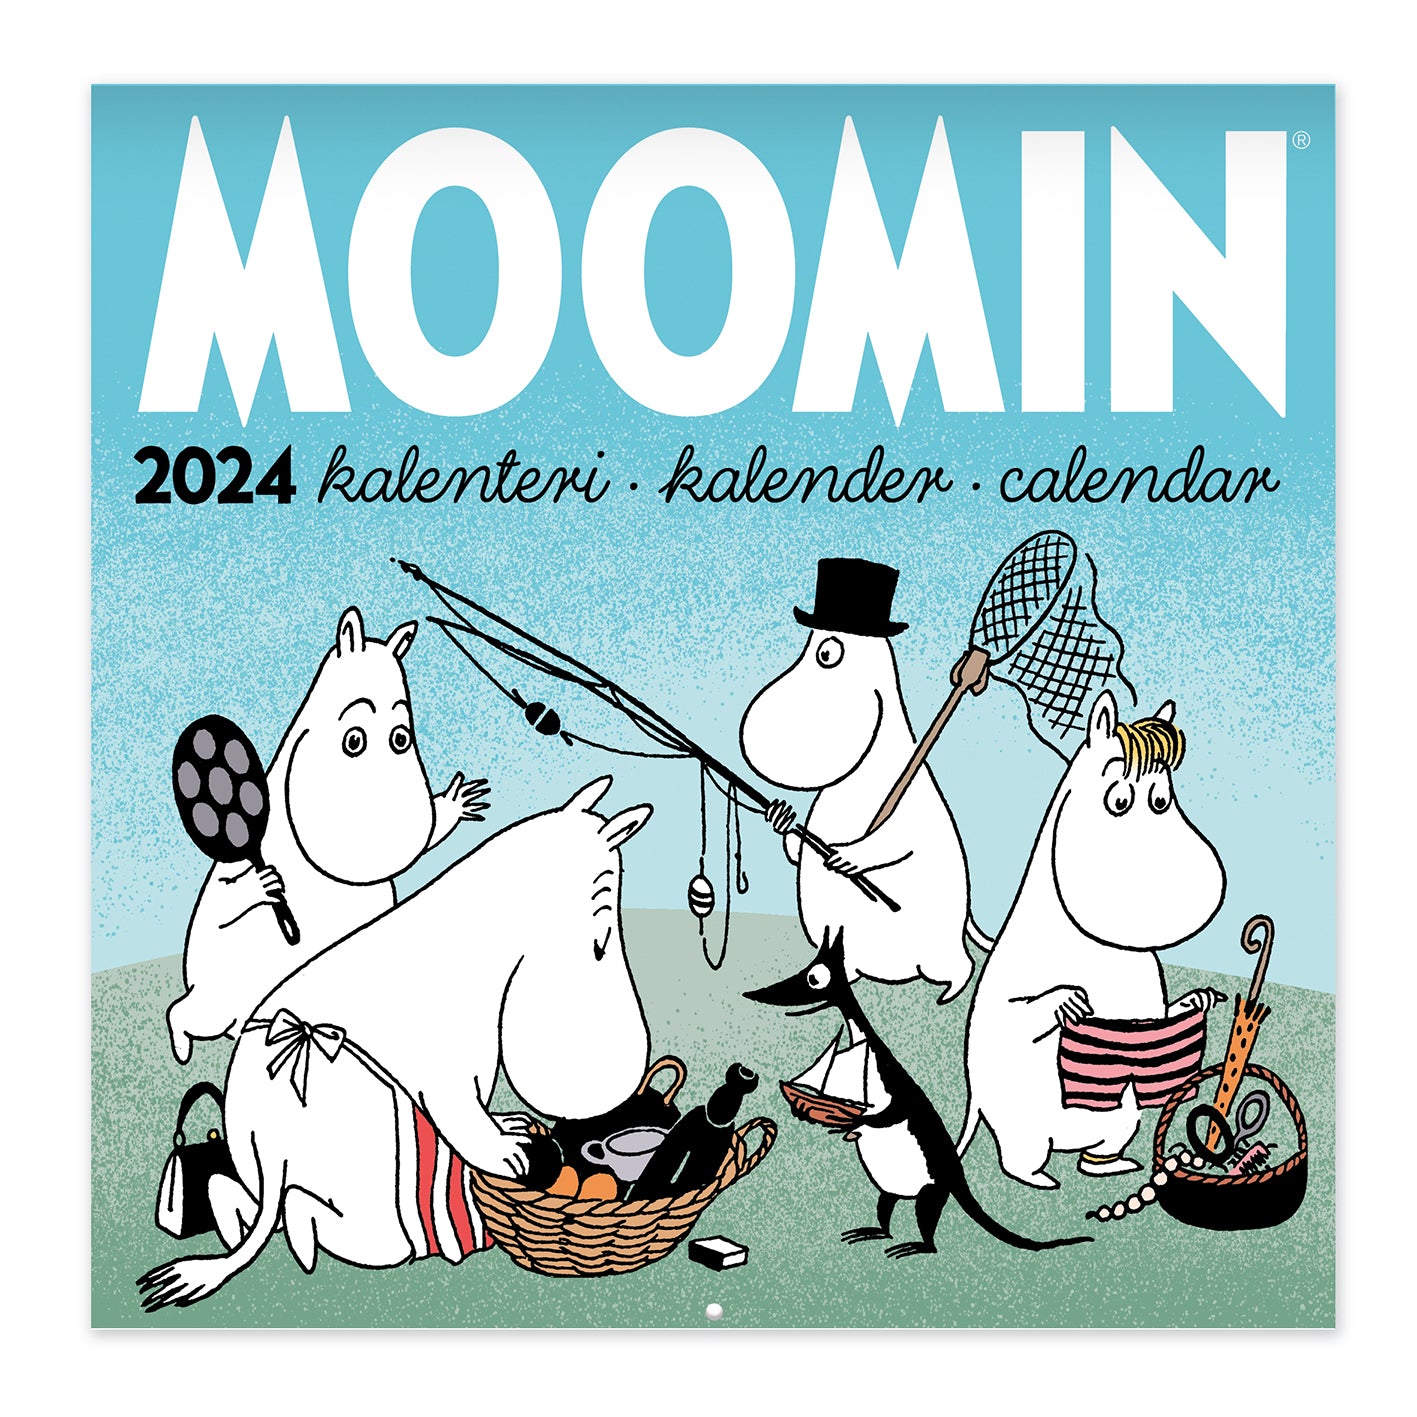 The shop for you who love Moomin! Moomin Wall Calendar